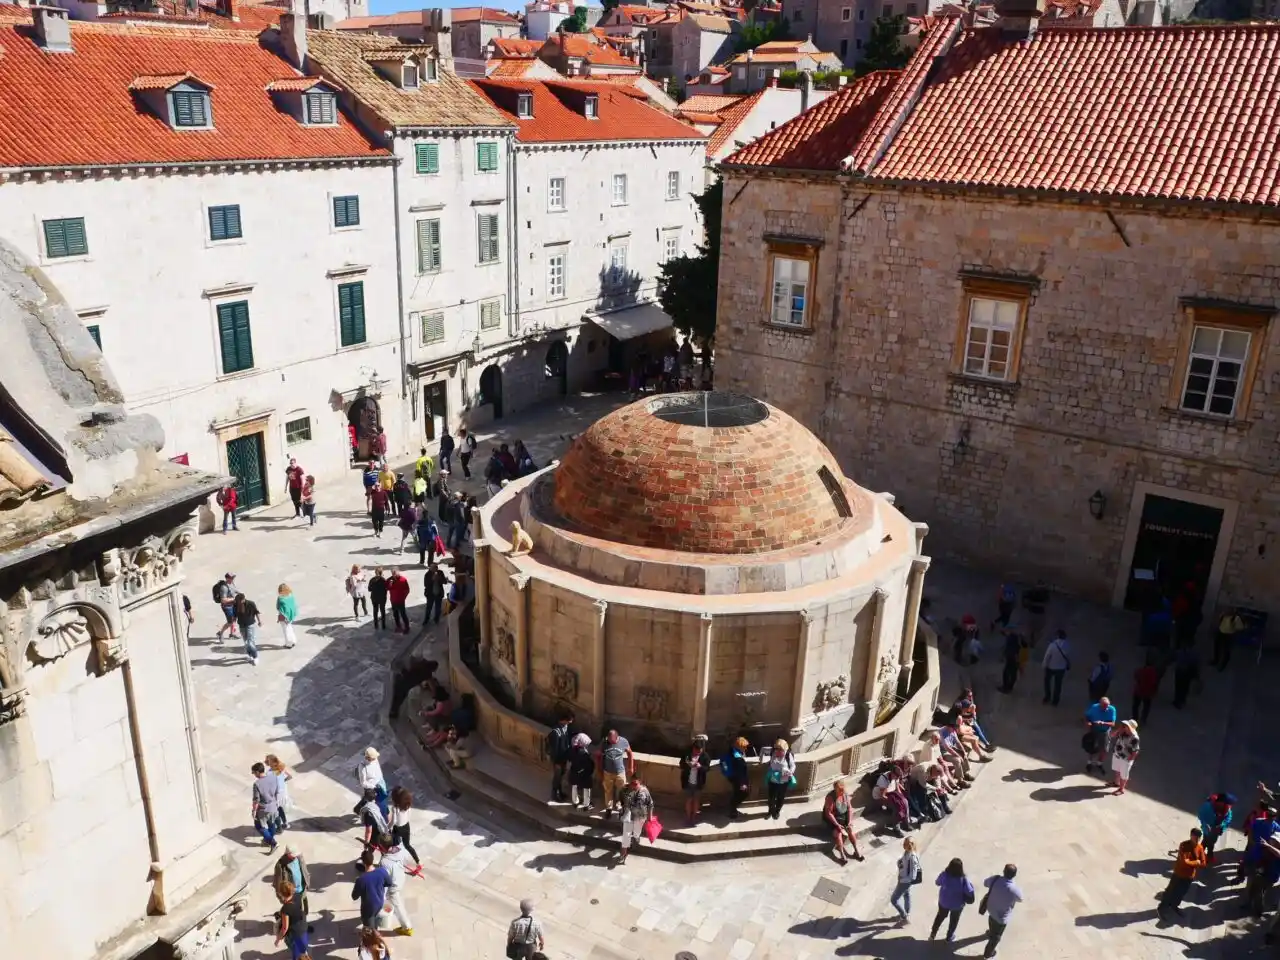 Onoffrio fountain in Dubrovnik